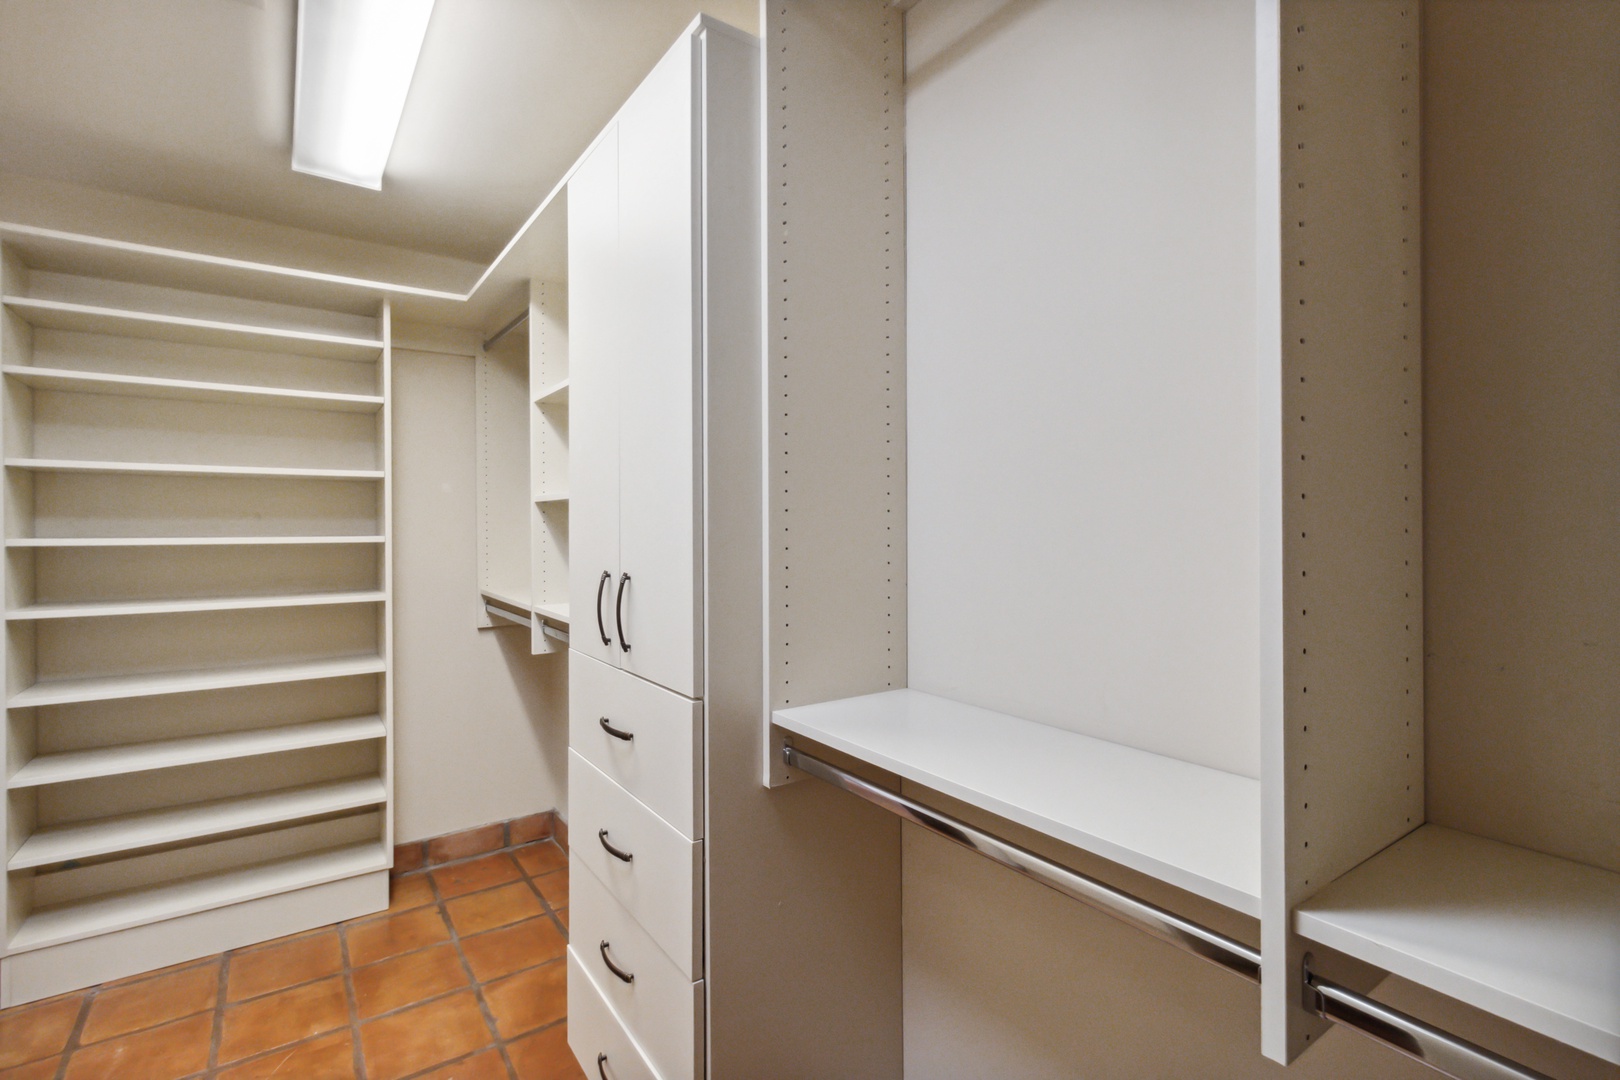 Scottsdale Vacation Rentals, Boulders Hideaway Villa - More storage in Primary bedroom closet